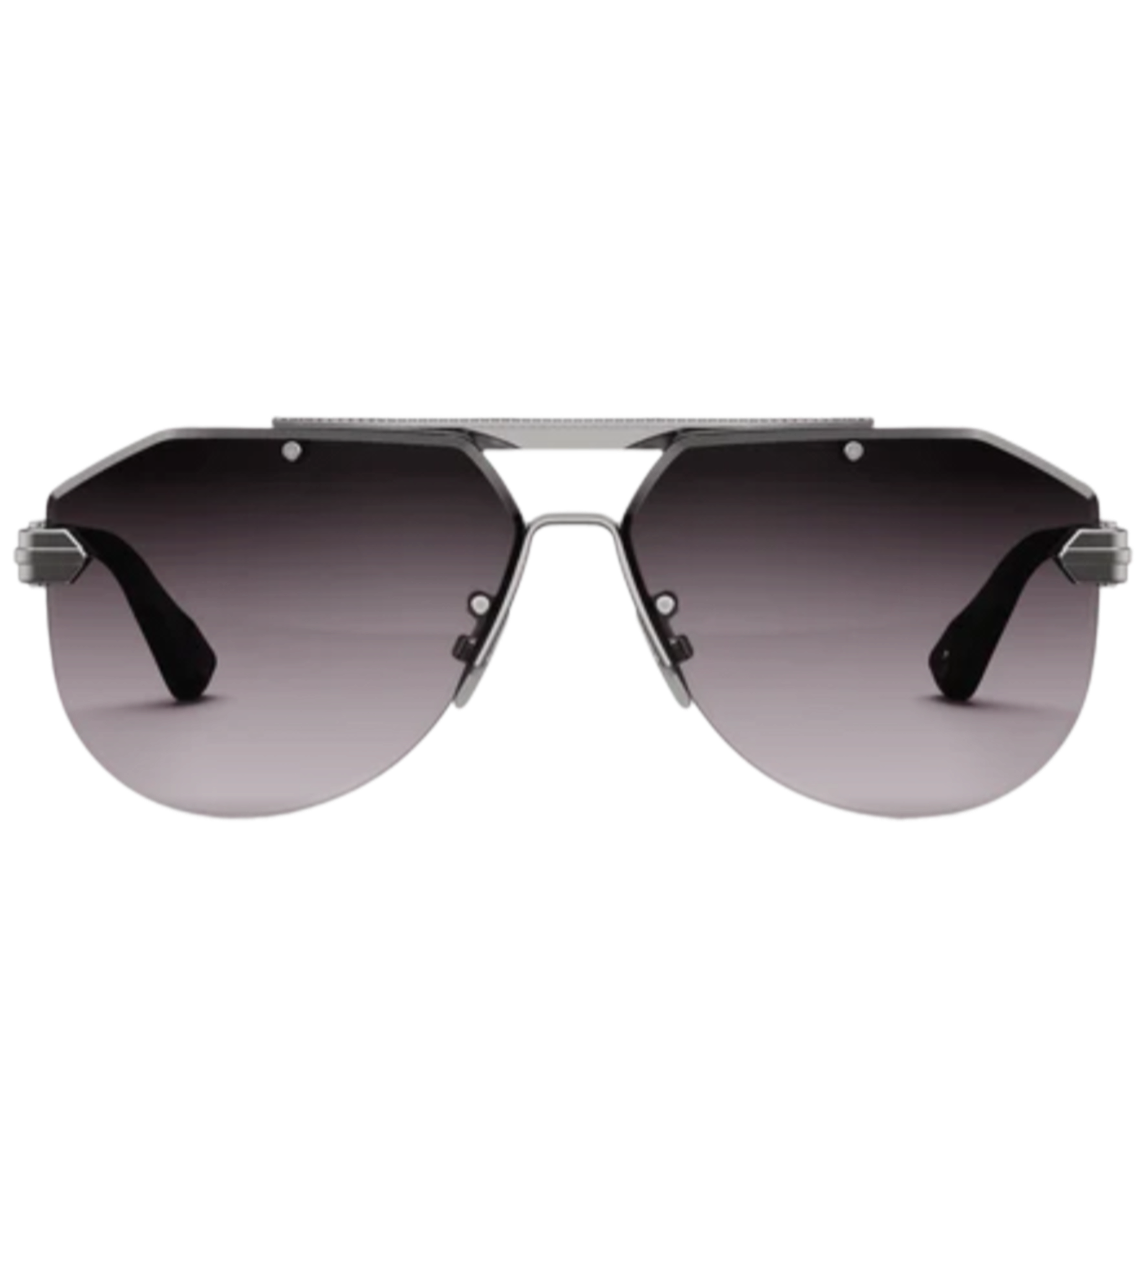 Cолнцезащитные очки Golden Concept Bizster - Silver